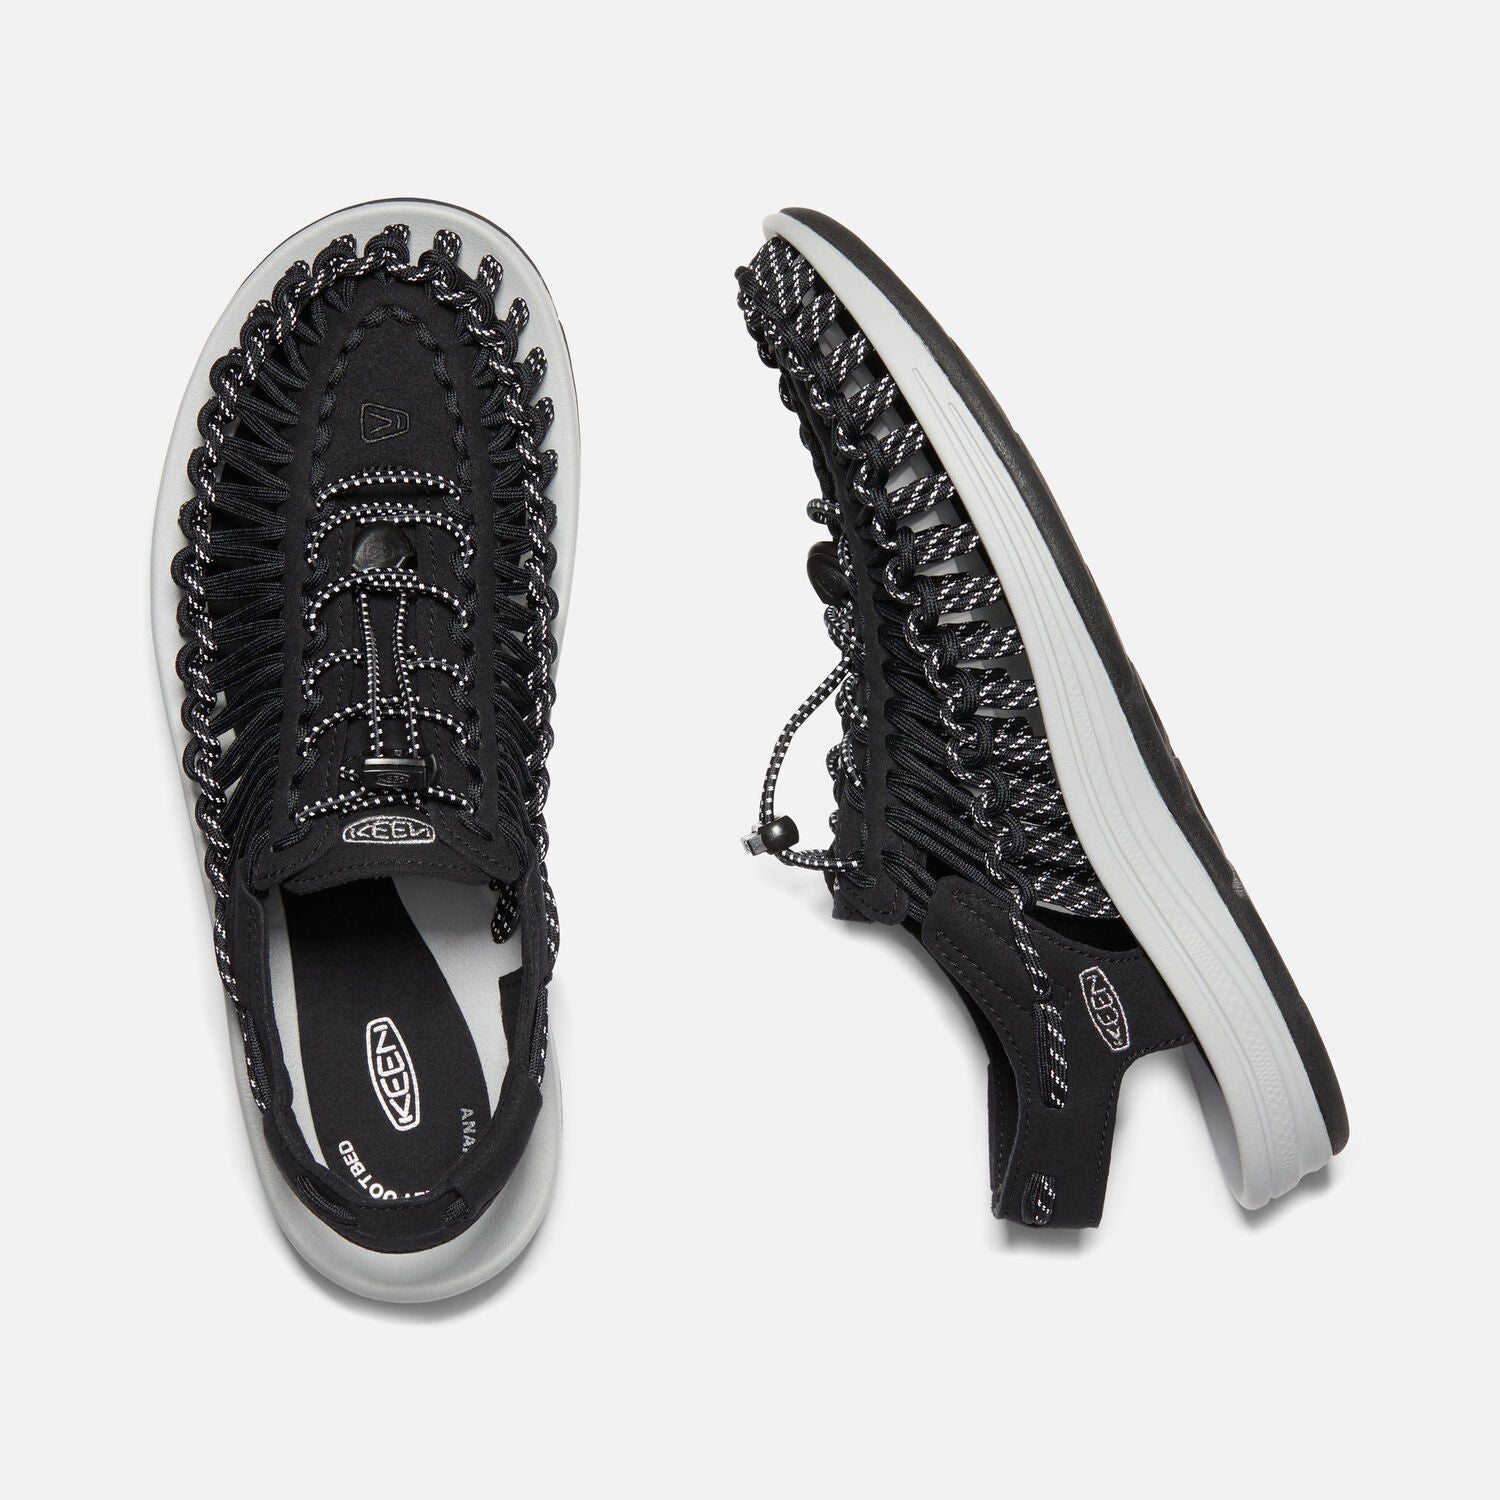 UNEEK Men's Two-Cord Water Sandal - Black/Silver